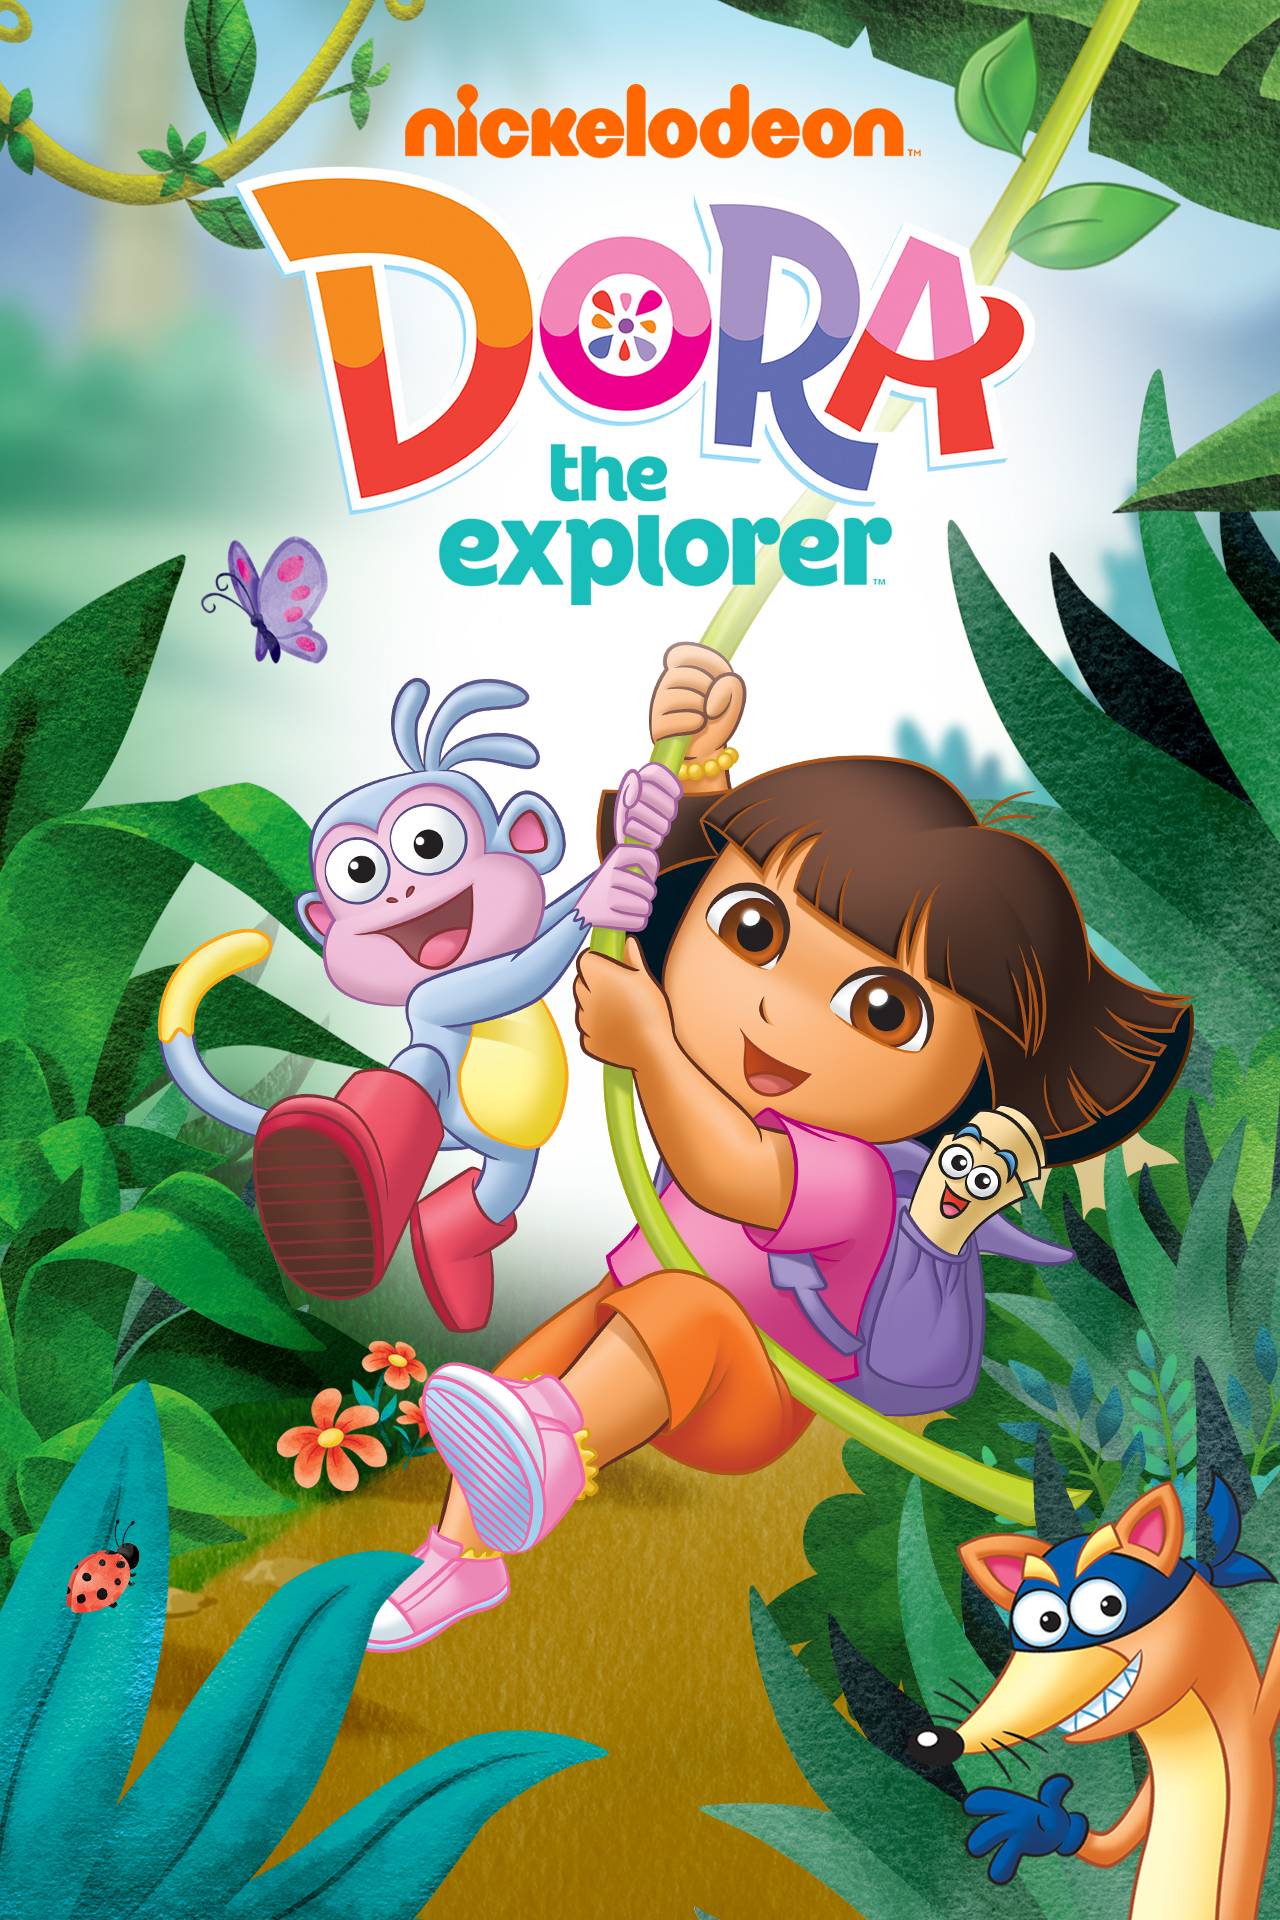 Meme Maker - What's your favorite movie? Dora the explorer I mean